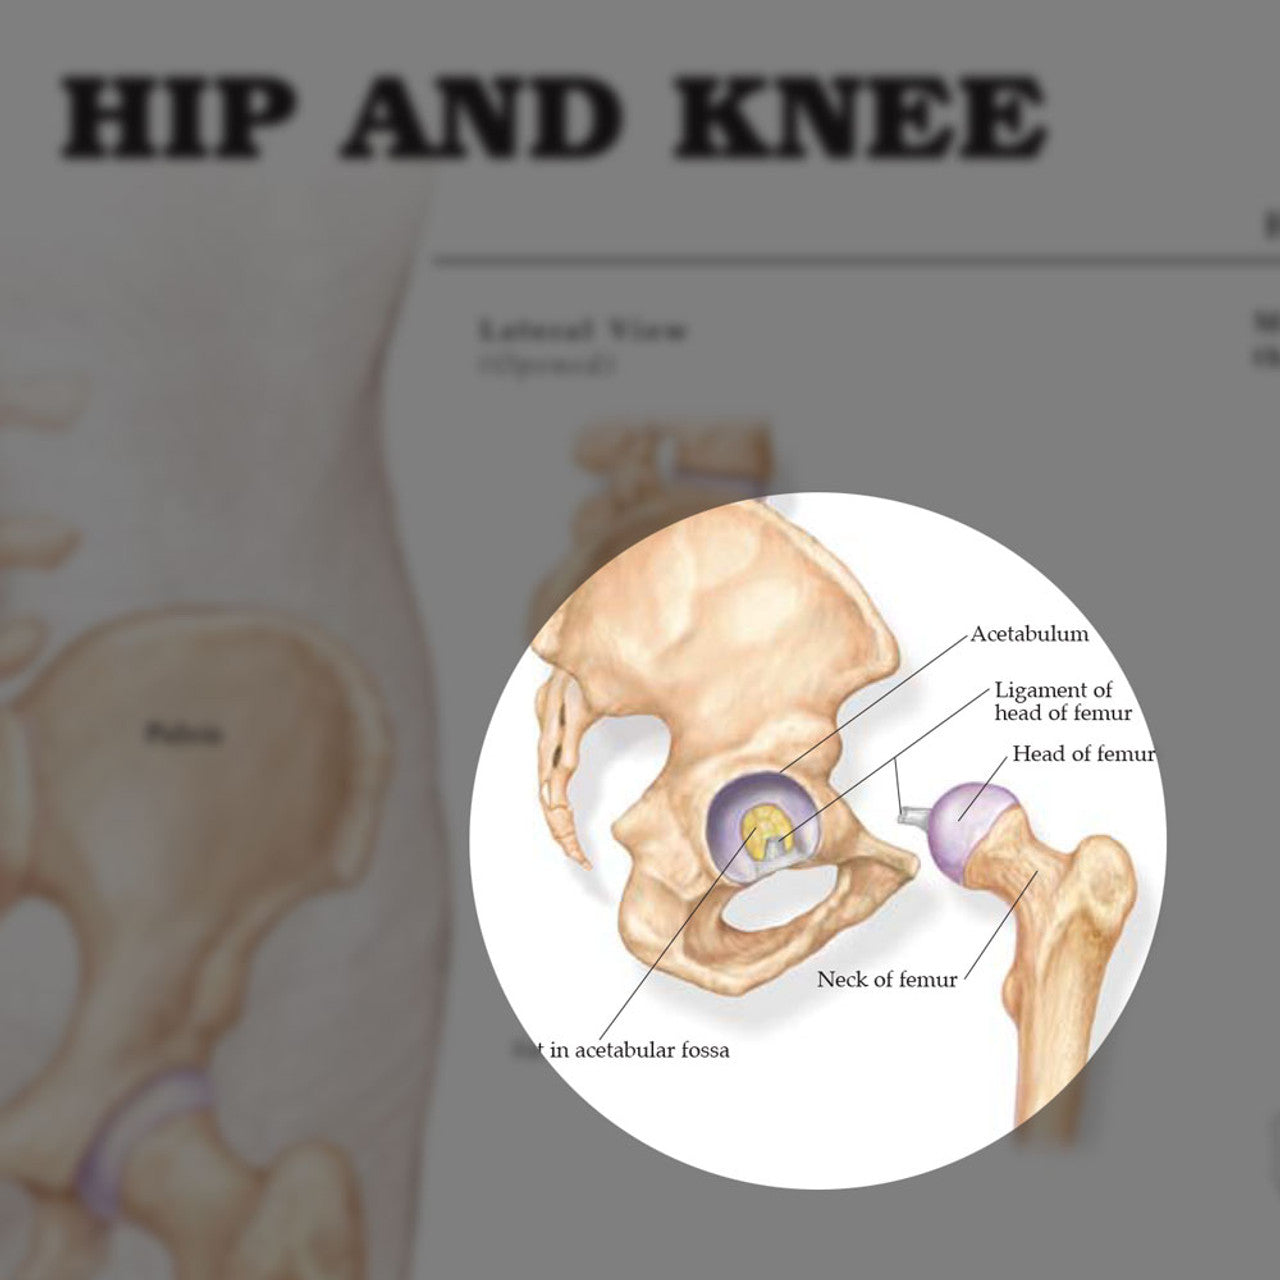 Hip & Knee ( Laminated) - physio supplies canada